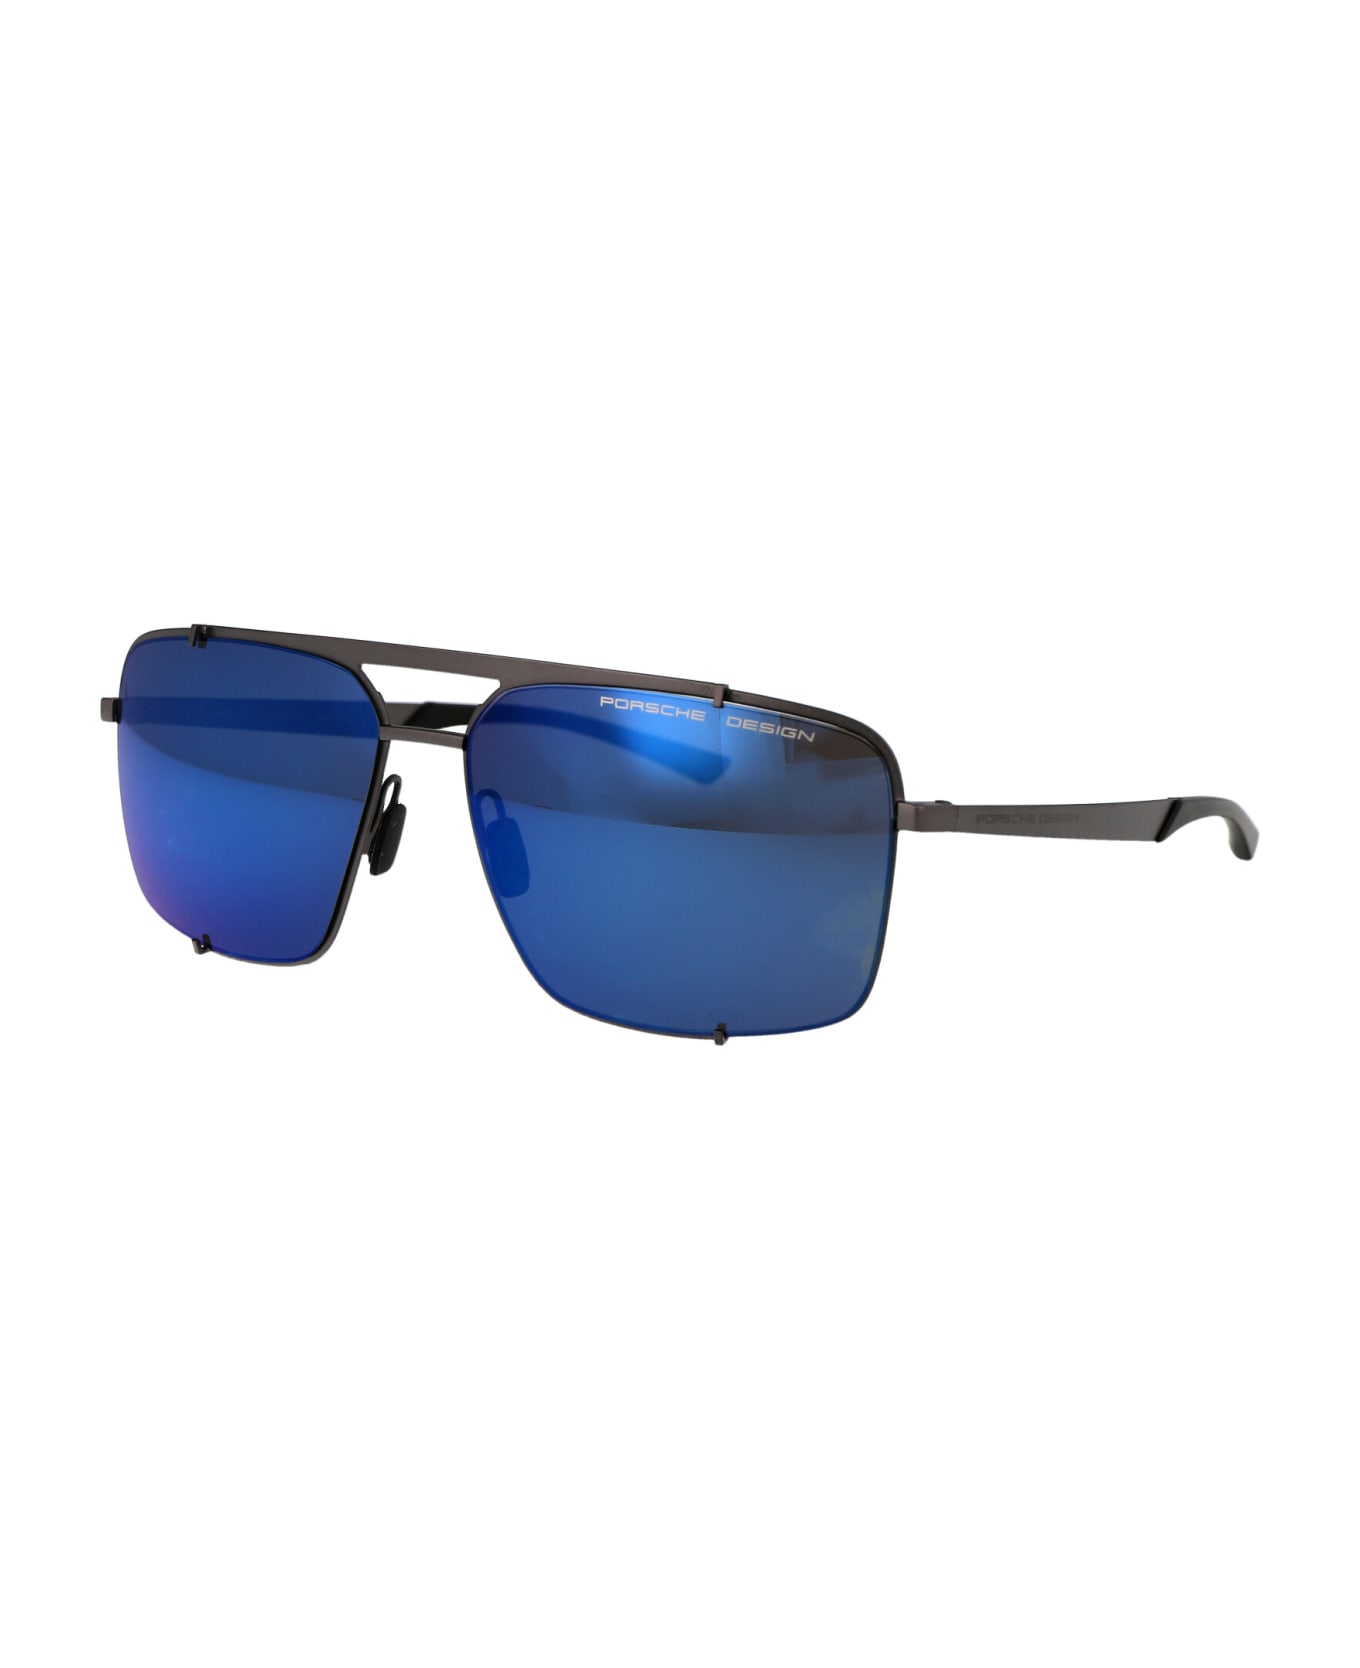 Porsche Design P8919 Sunglasses - D279 BLUE/MIRROR BLUE サングラス